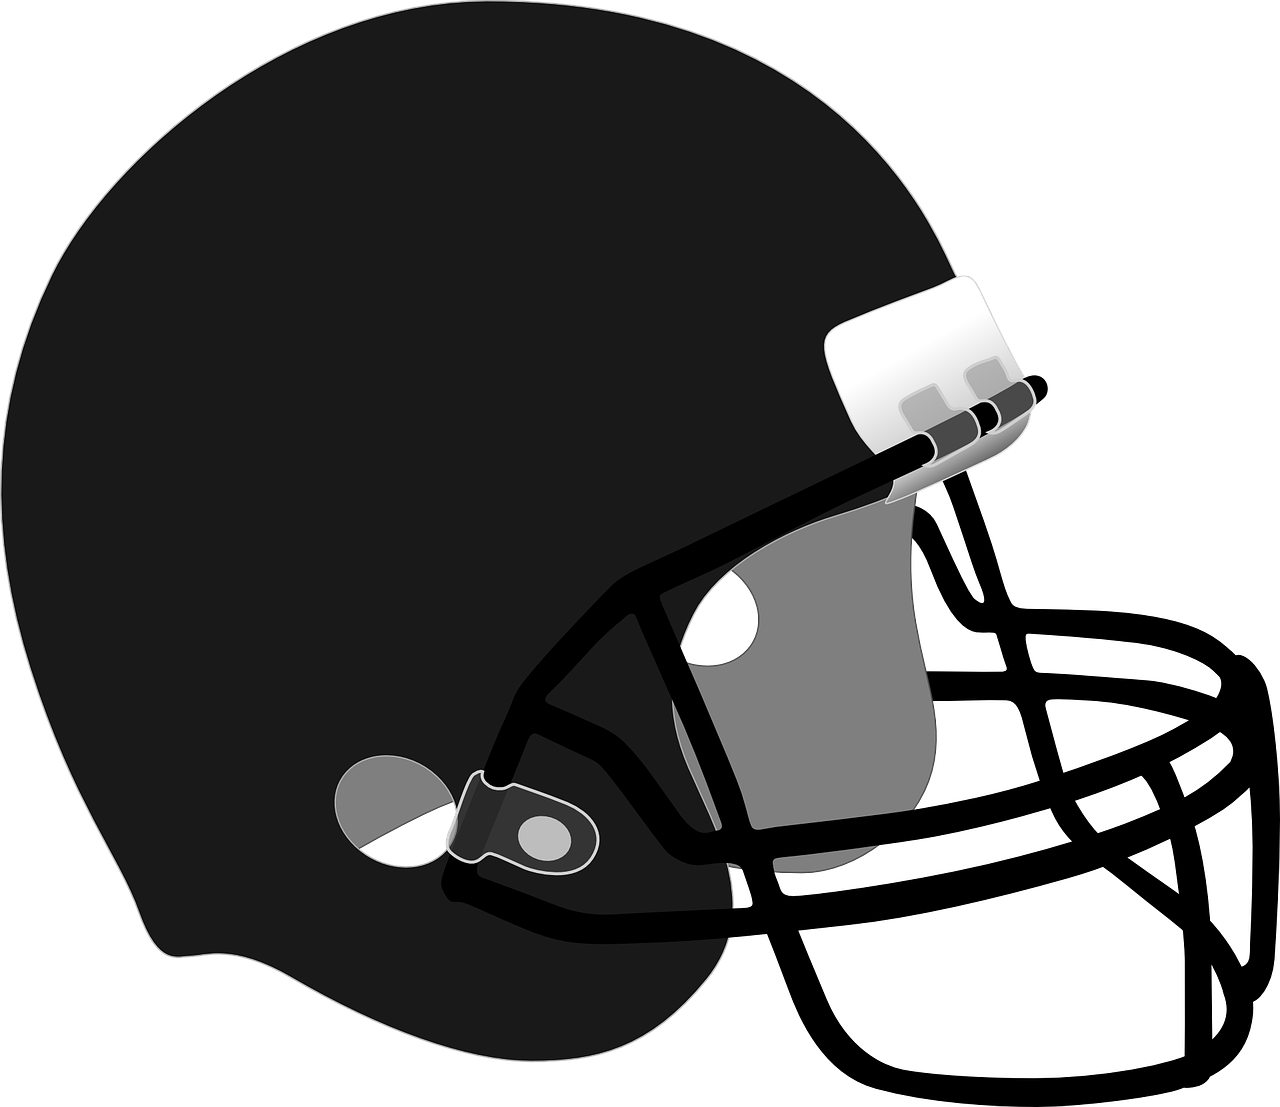 football helmet safety free photo